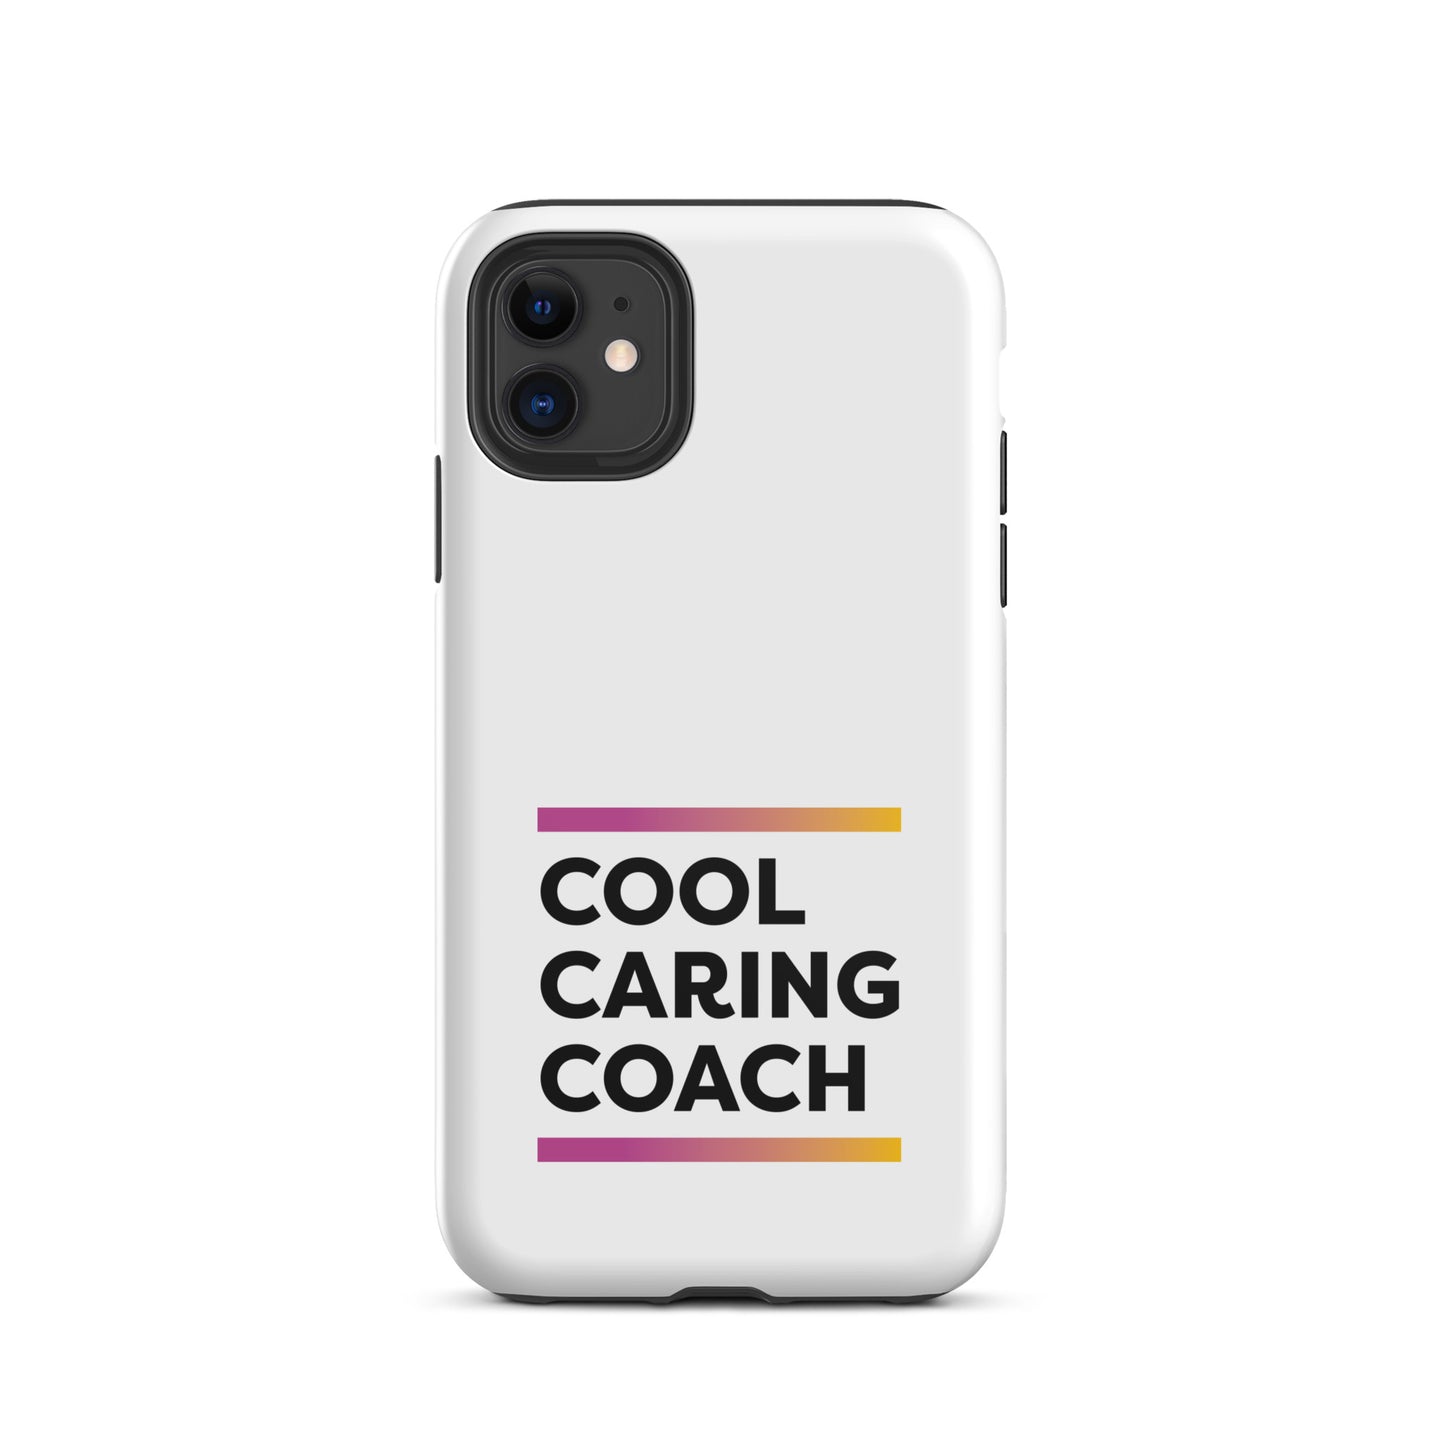 Cool Caring Coach iPhone case